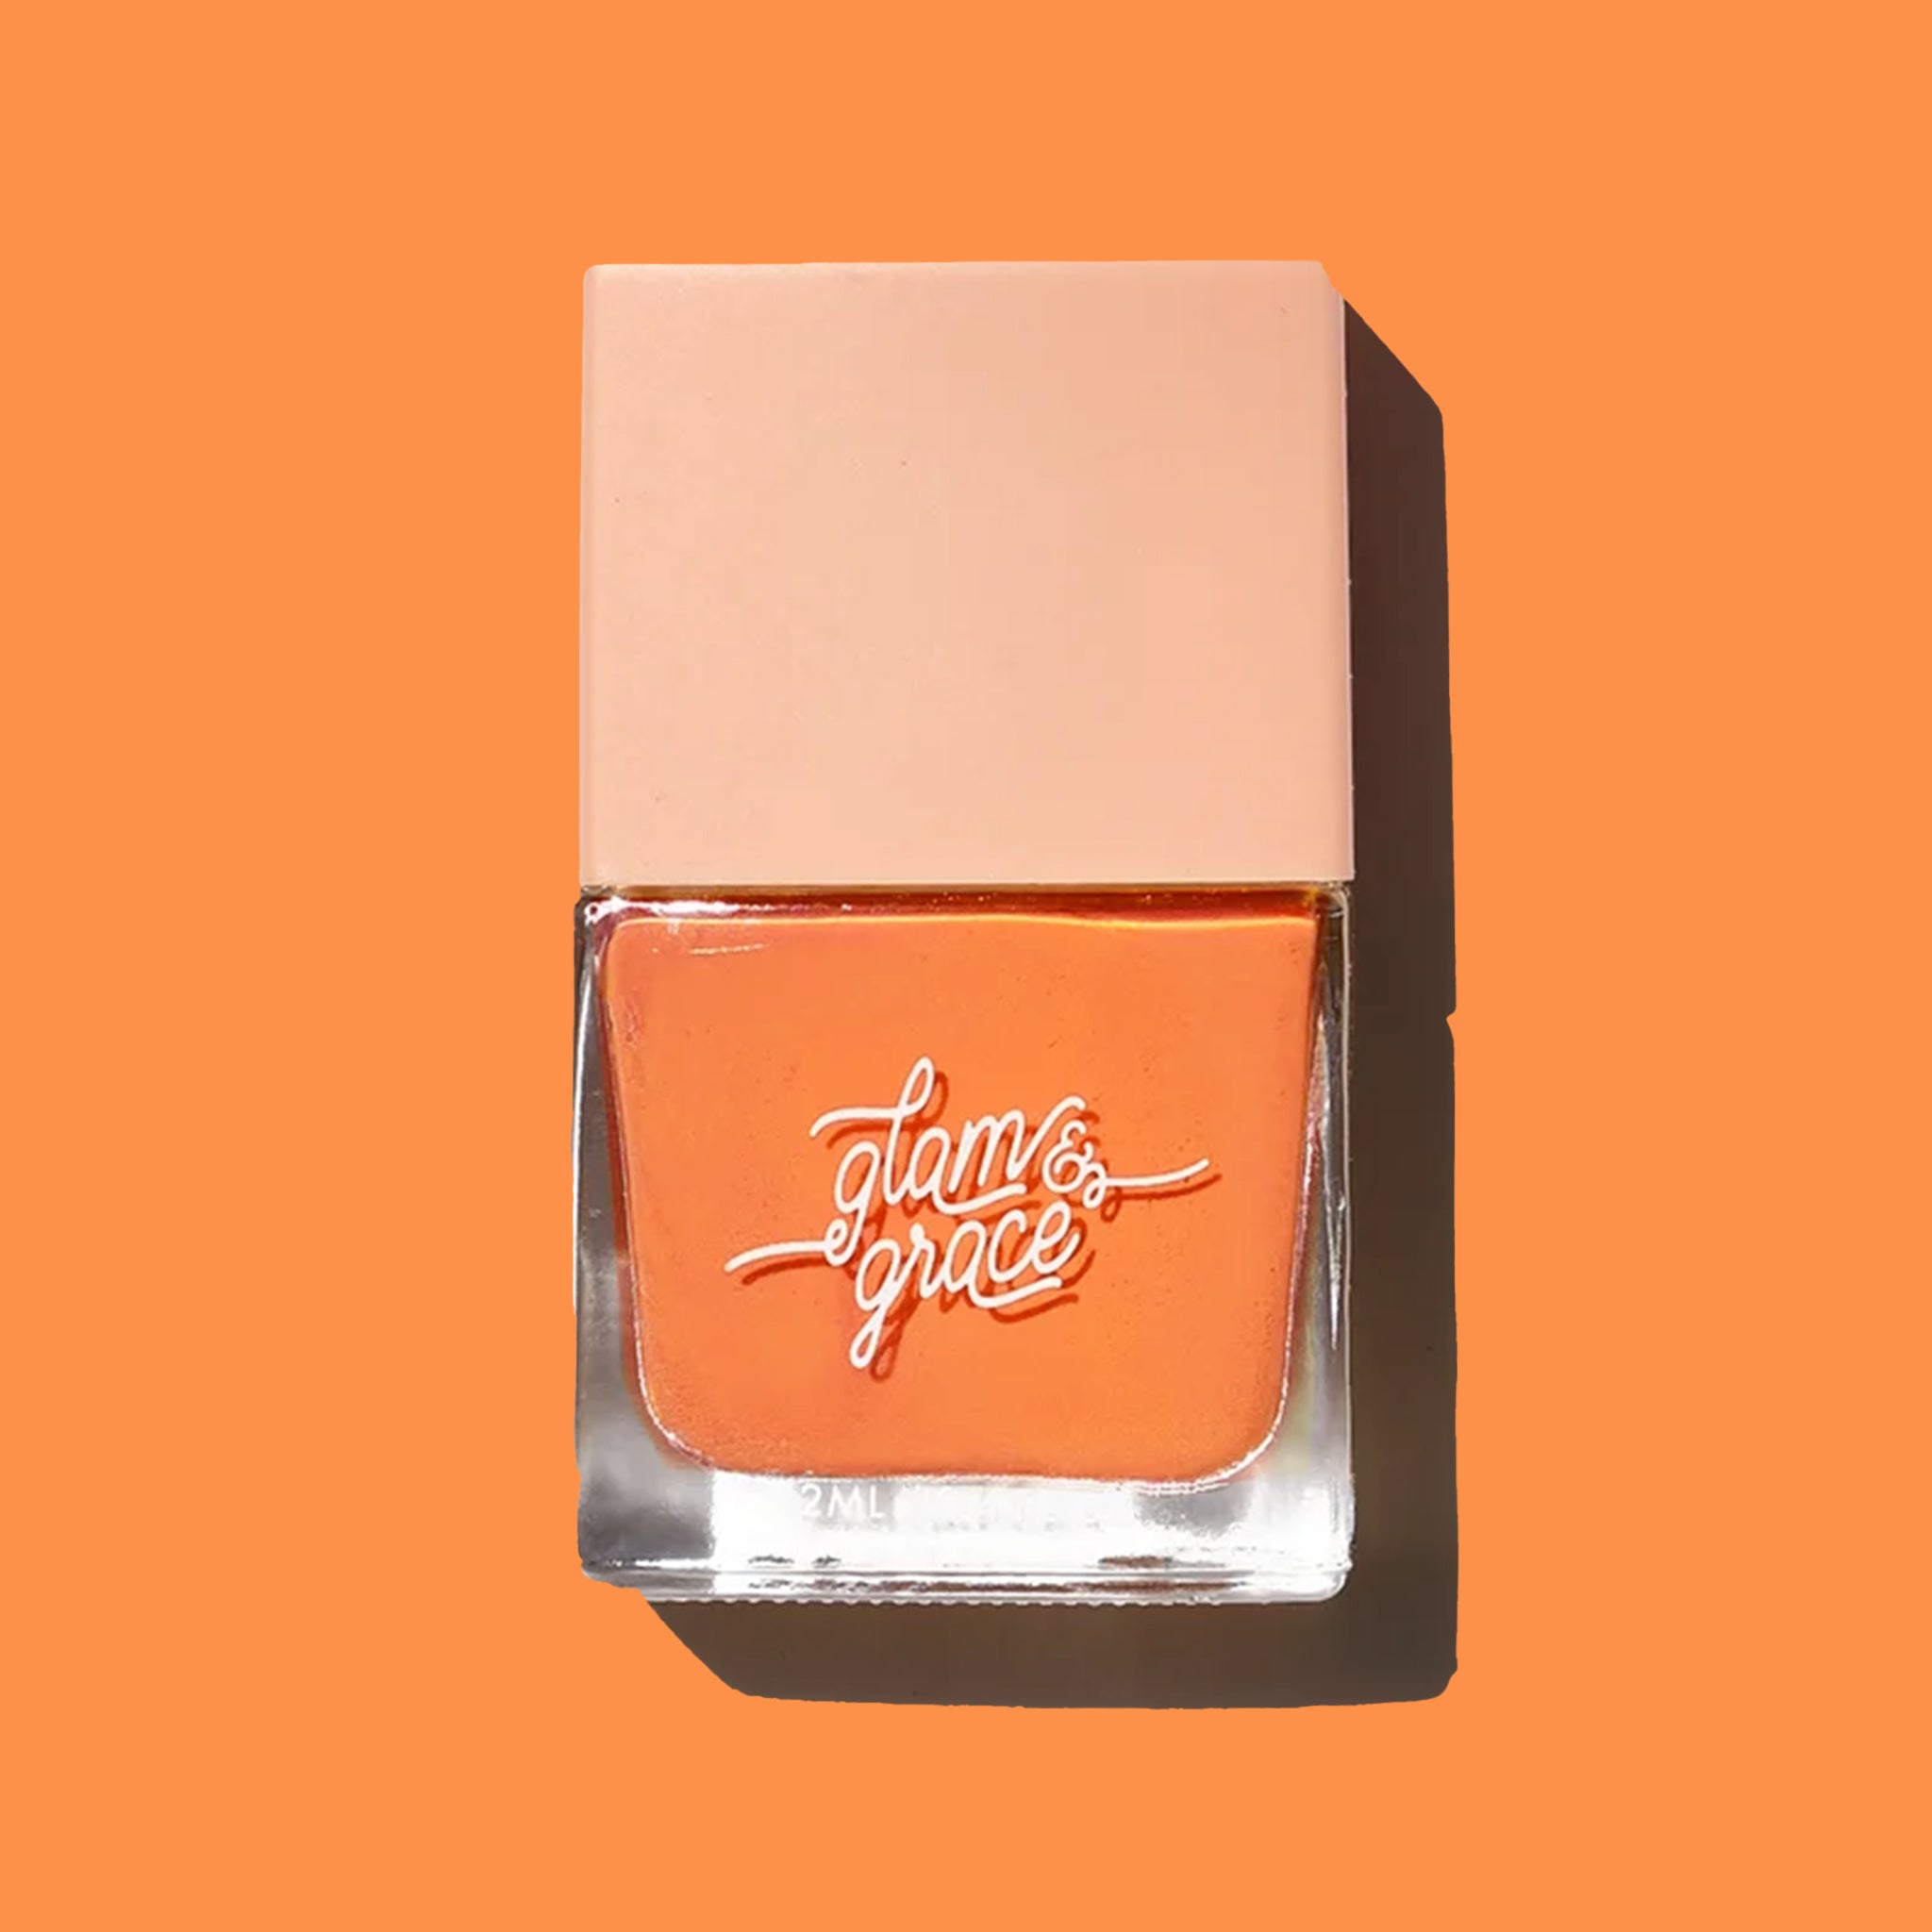 On an orange background is a square bottle of orange nail polish. 